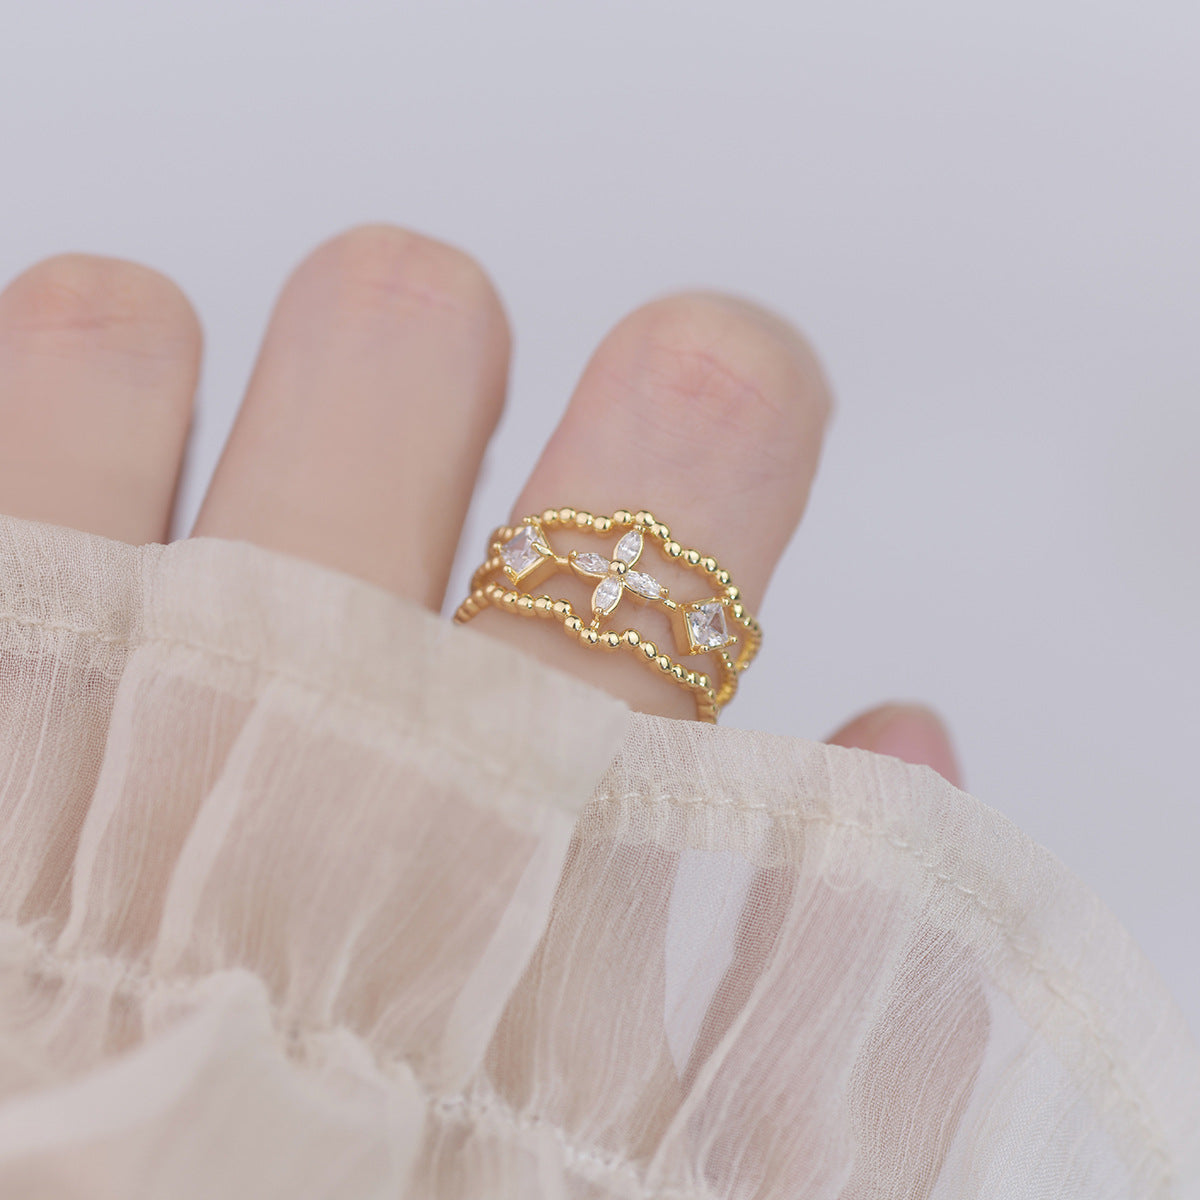 Opal Blossom Ring Set